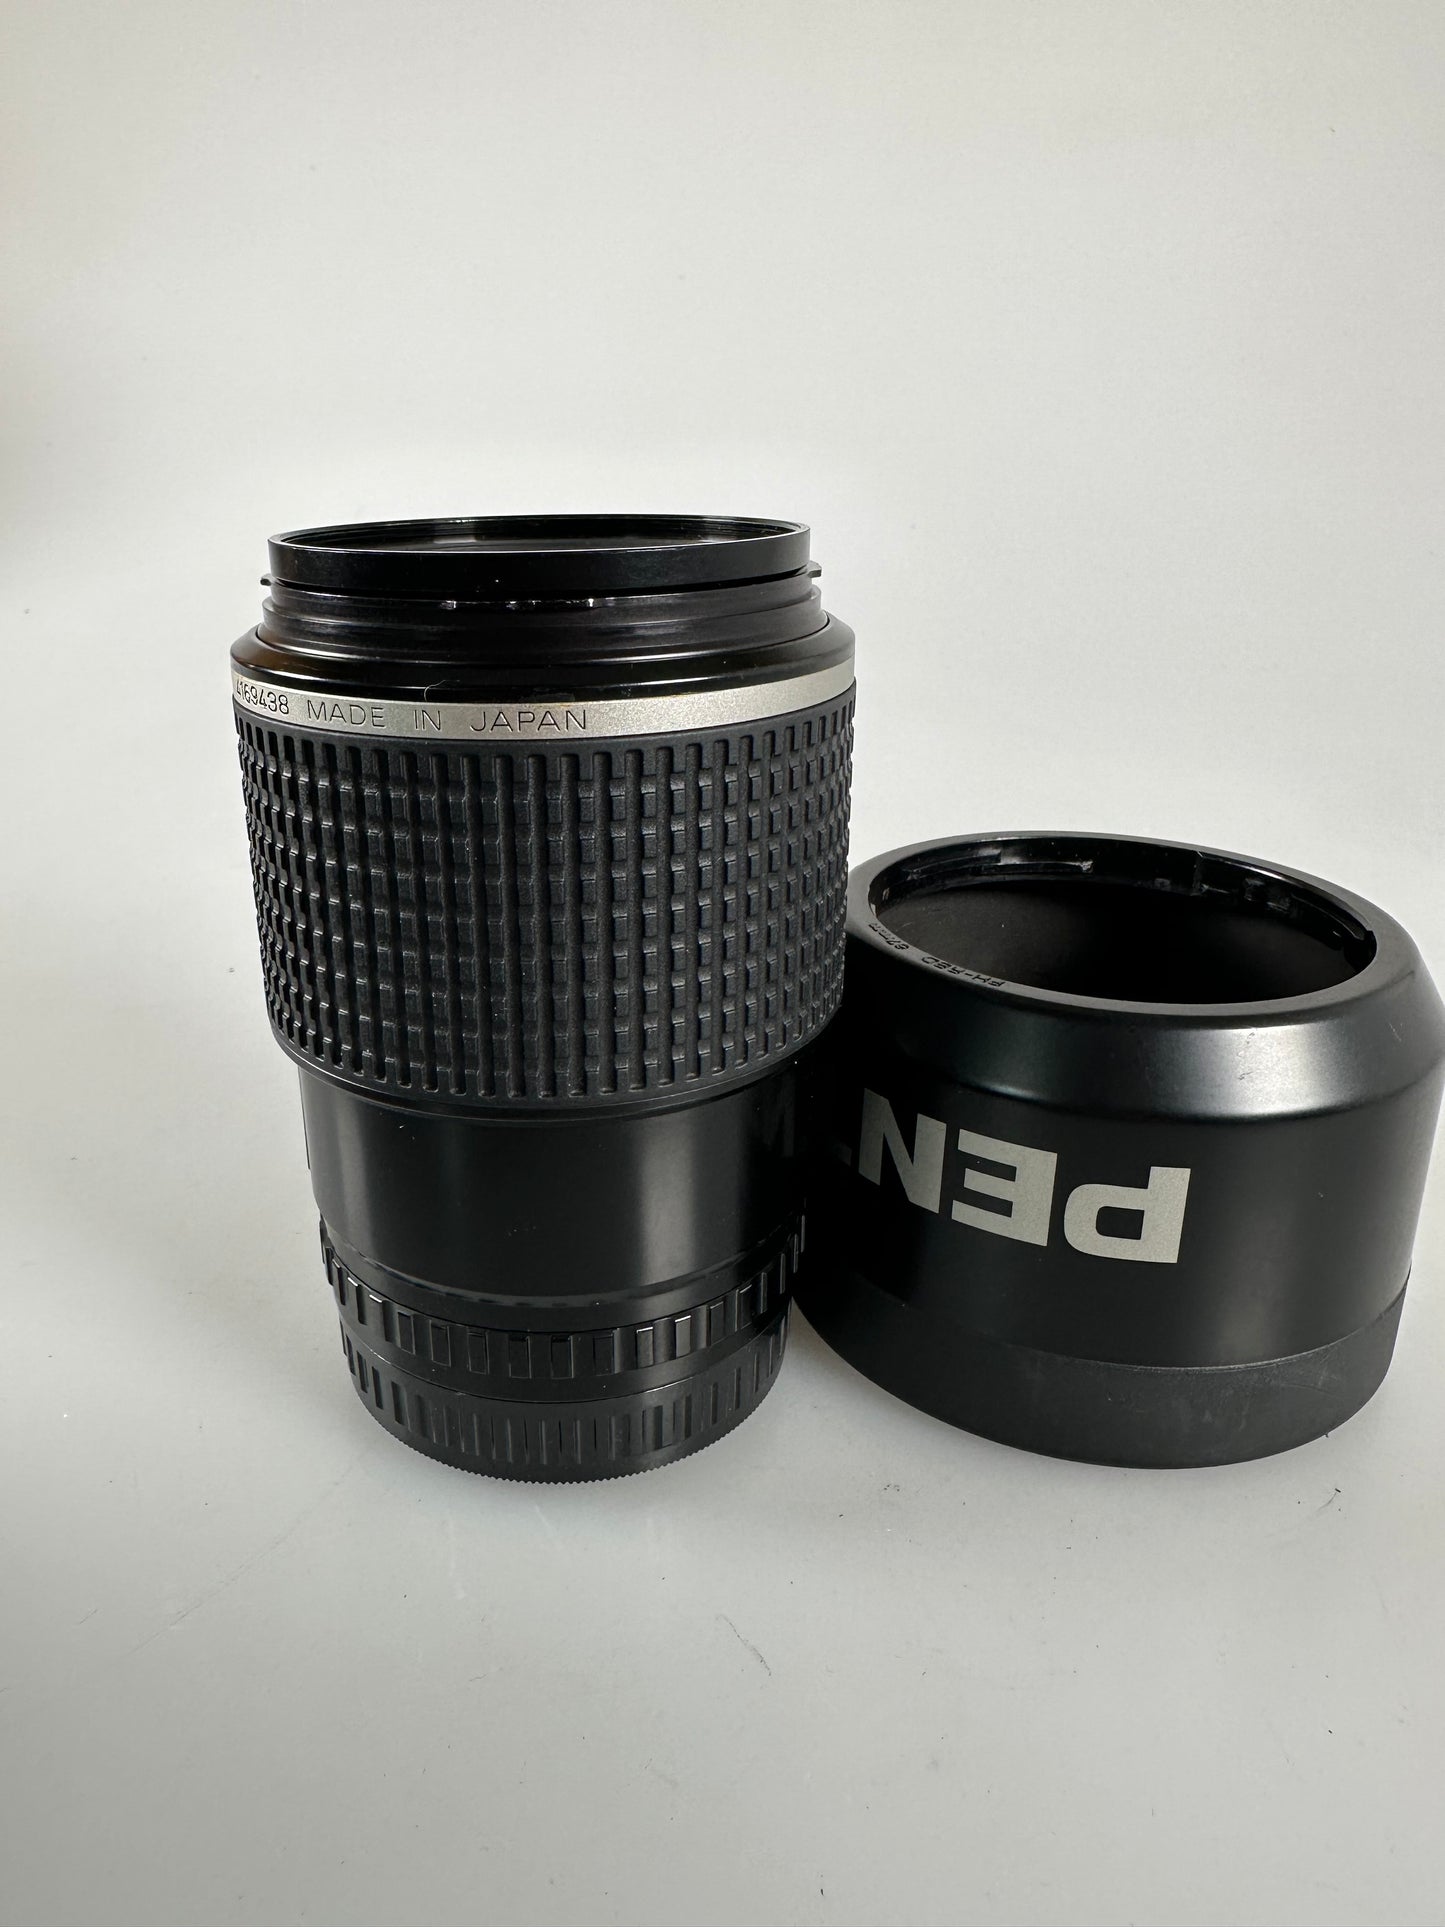 SMC PENTAX FA 645 120mm f4 Macro Lens for 645 N NII